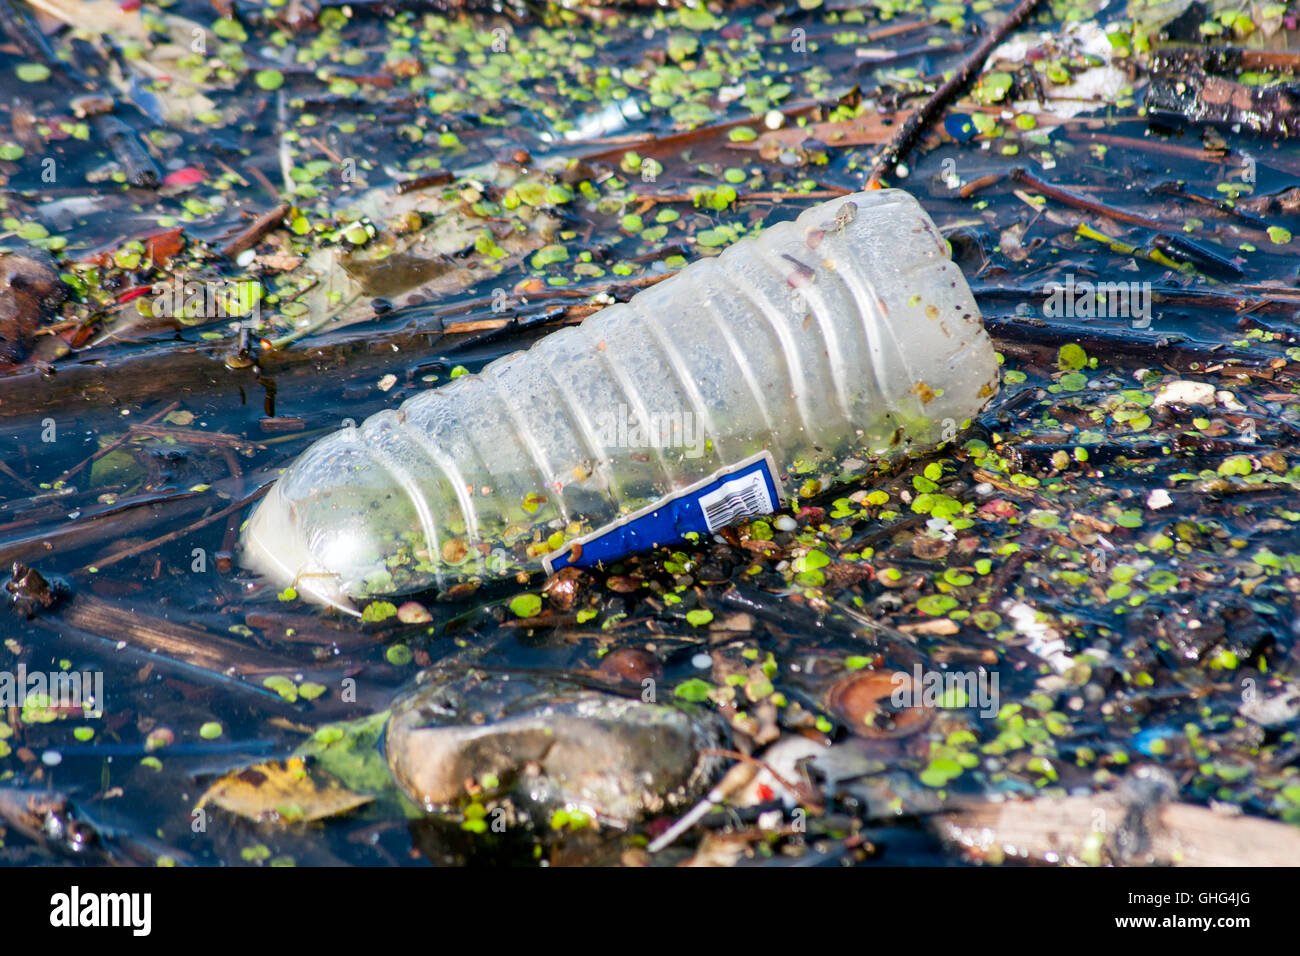 https://c8.alamy.com/comp/GHG4JG/empty-plastic-bottle-pollutes-waterway-GHG4JG.jpg